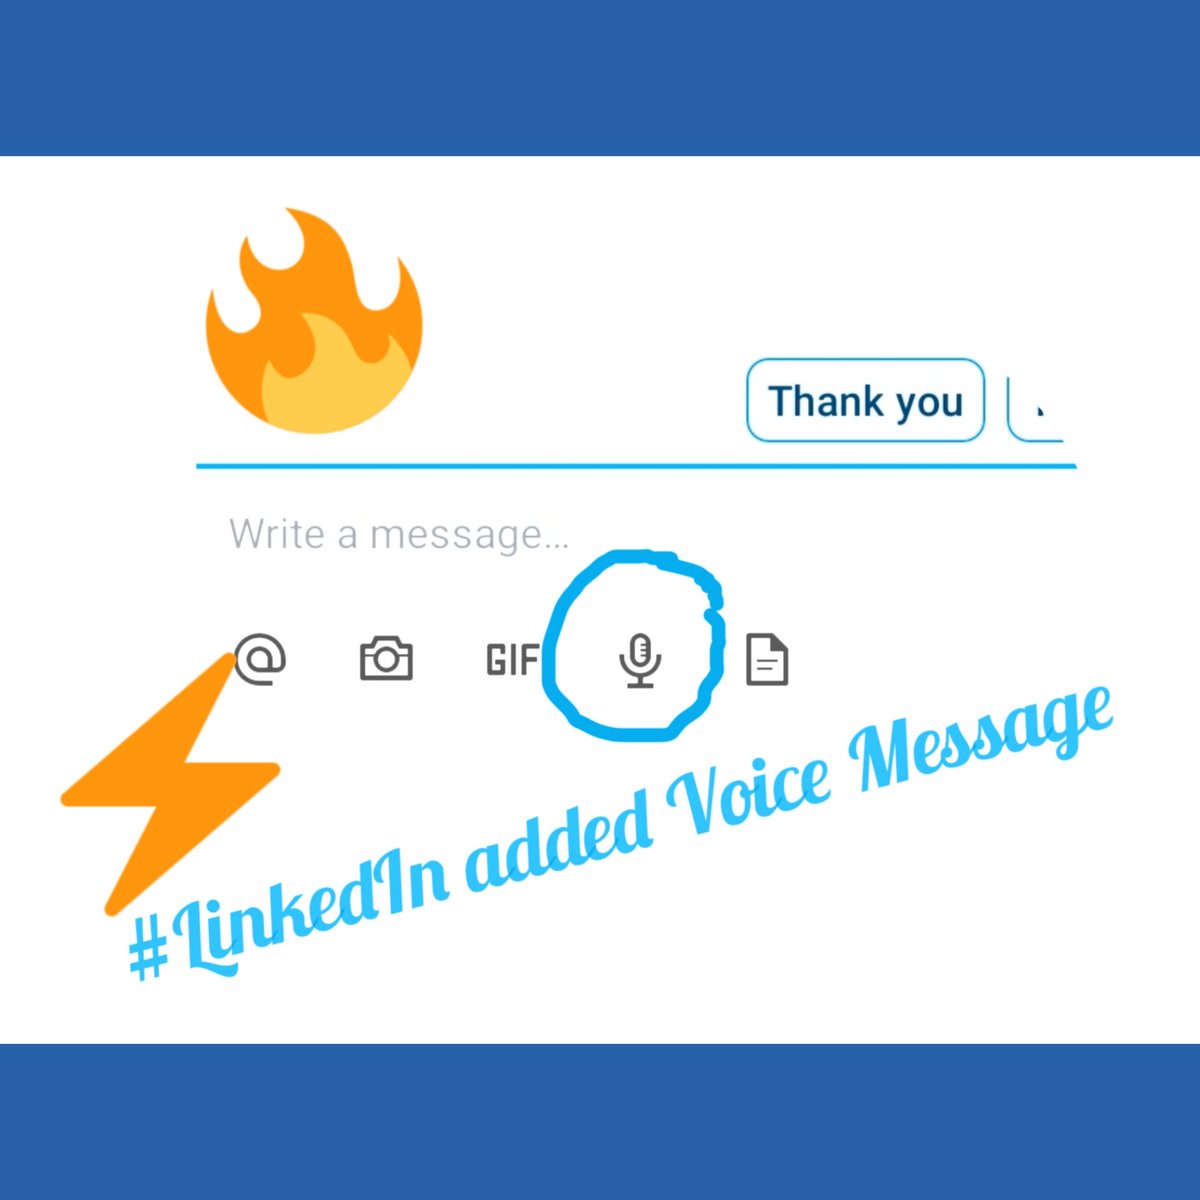 My favourite platform keeps getting better! 
#LinkedIn added #voicemessaging 
Happy voice messages 😀
Have a great weekend!
#LinkedIn #LinkedInFam #LinkedInLove #LinkedInNetwork #News